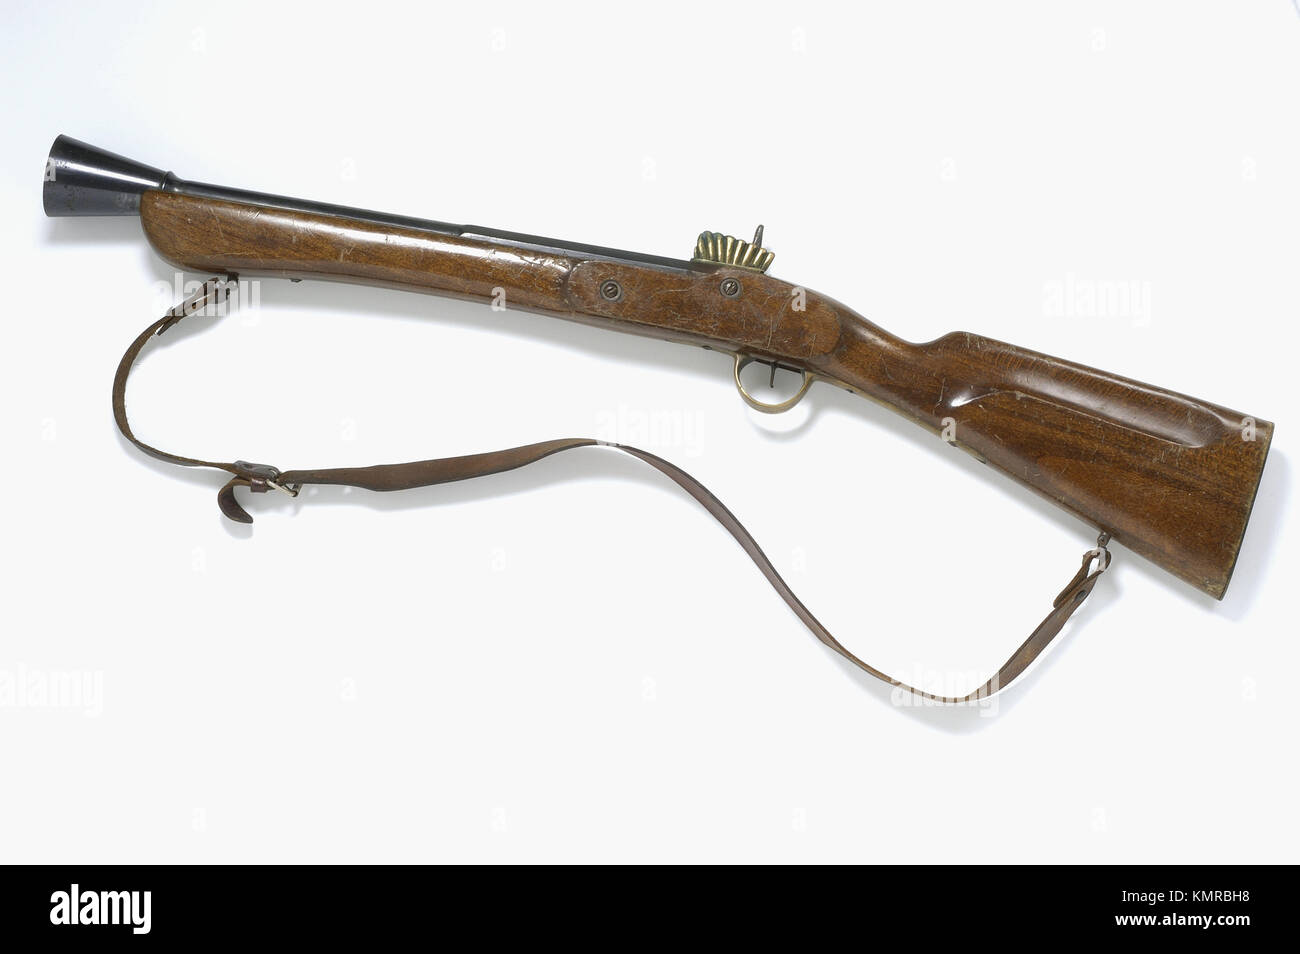 1800s IRISH Flintlock BLUNDERBUSS by PATTISON Dublin Antique 200+ Year Old  Close Range Weapon!